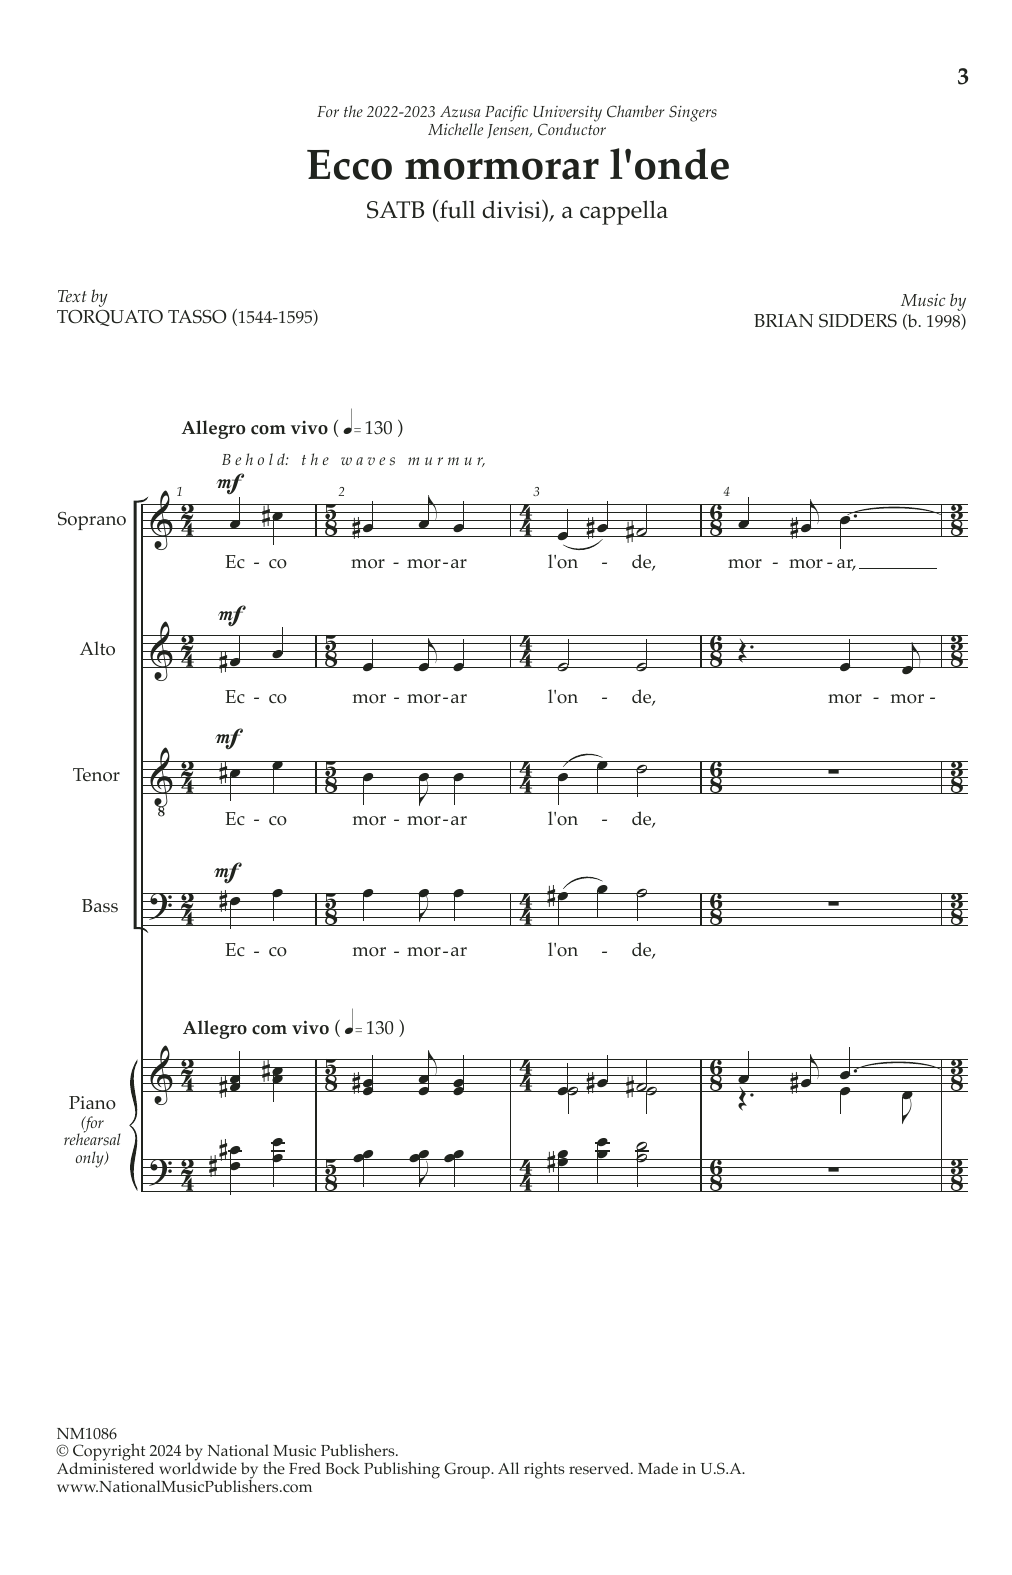 Brian Sidders Ecco mormorar l'onde Sheet Music Notes & Chords for SATB Choir - Download or Print PDF